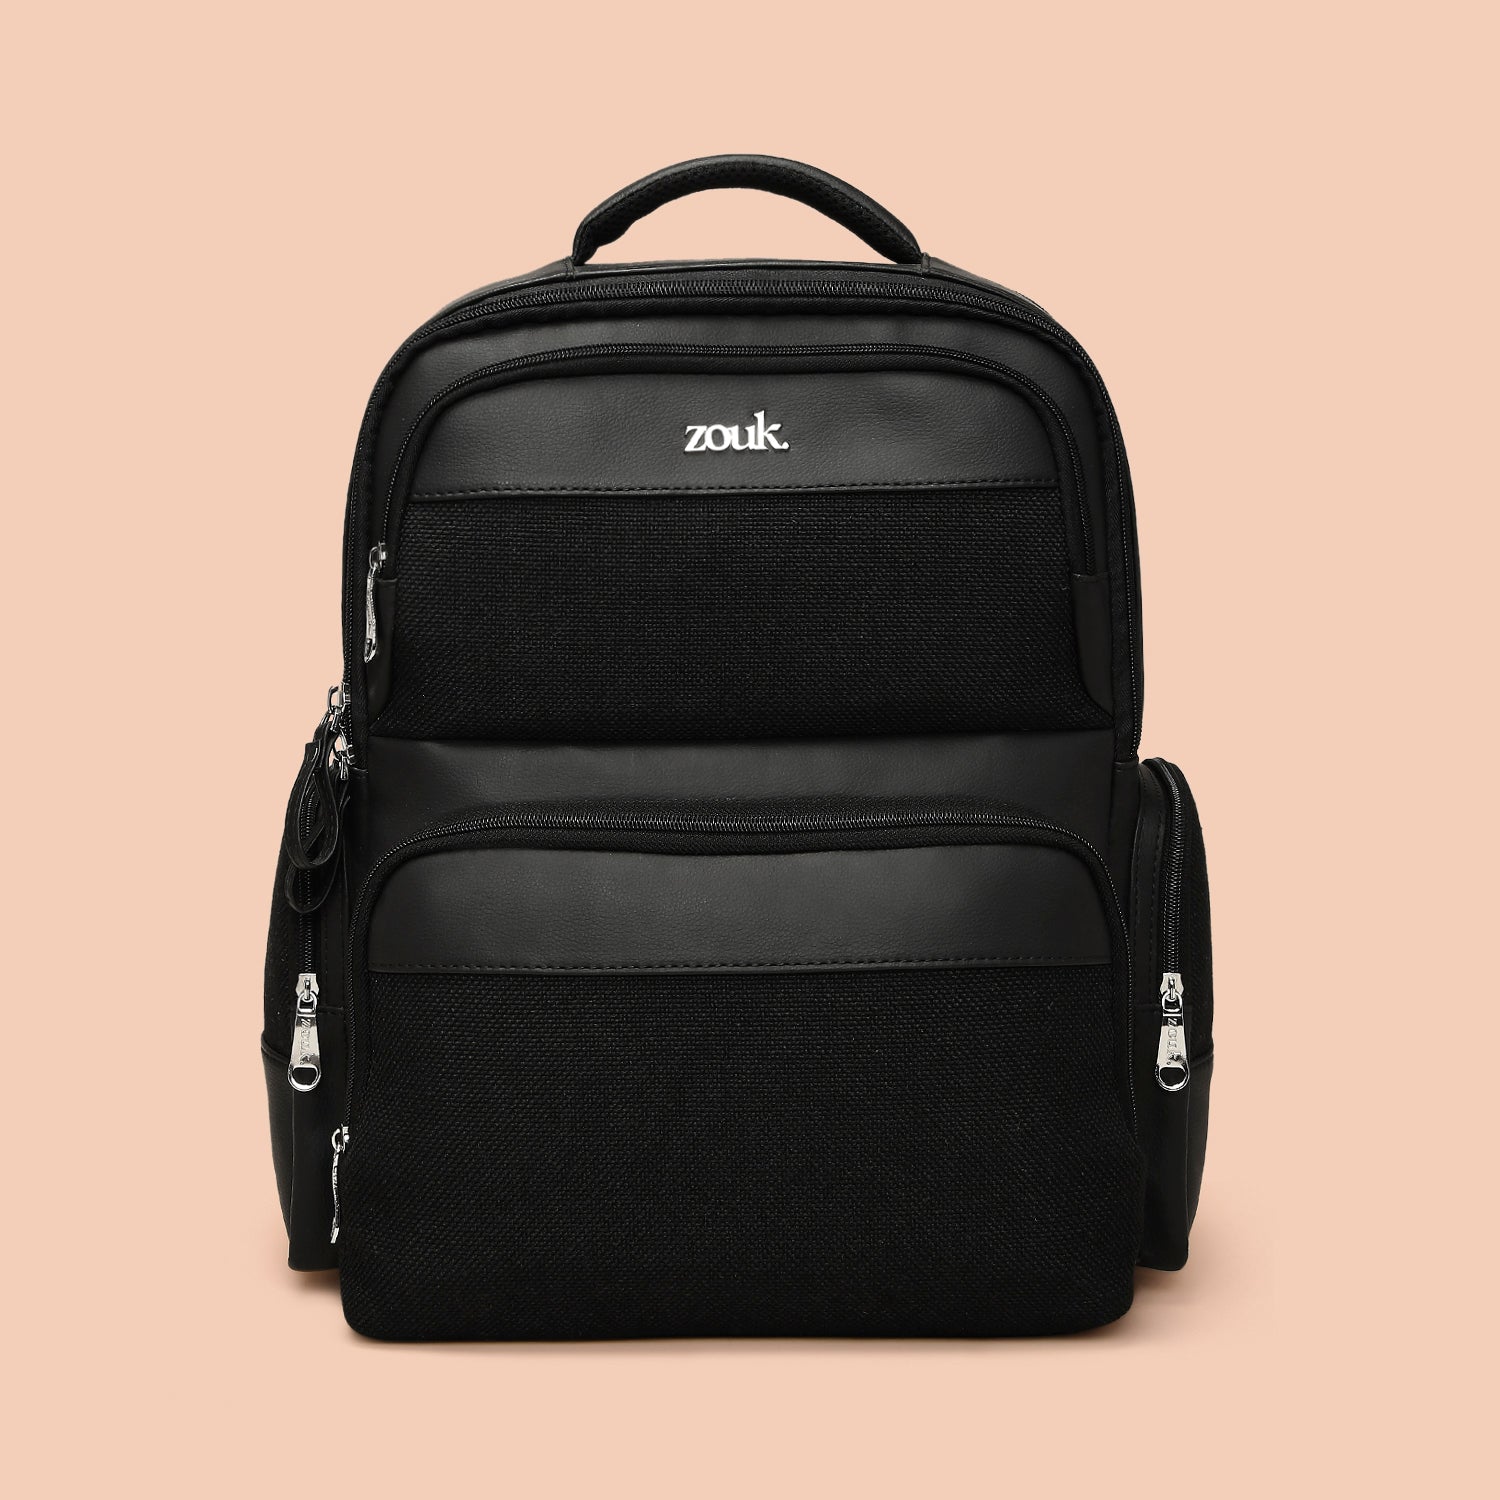 Jet Black Consultant Backpack